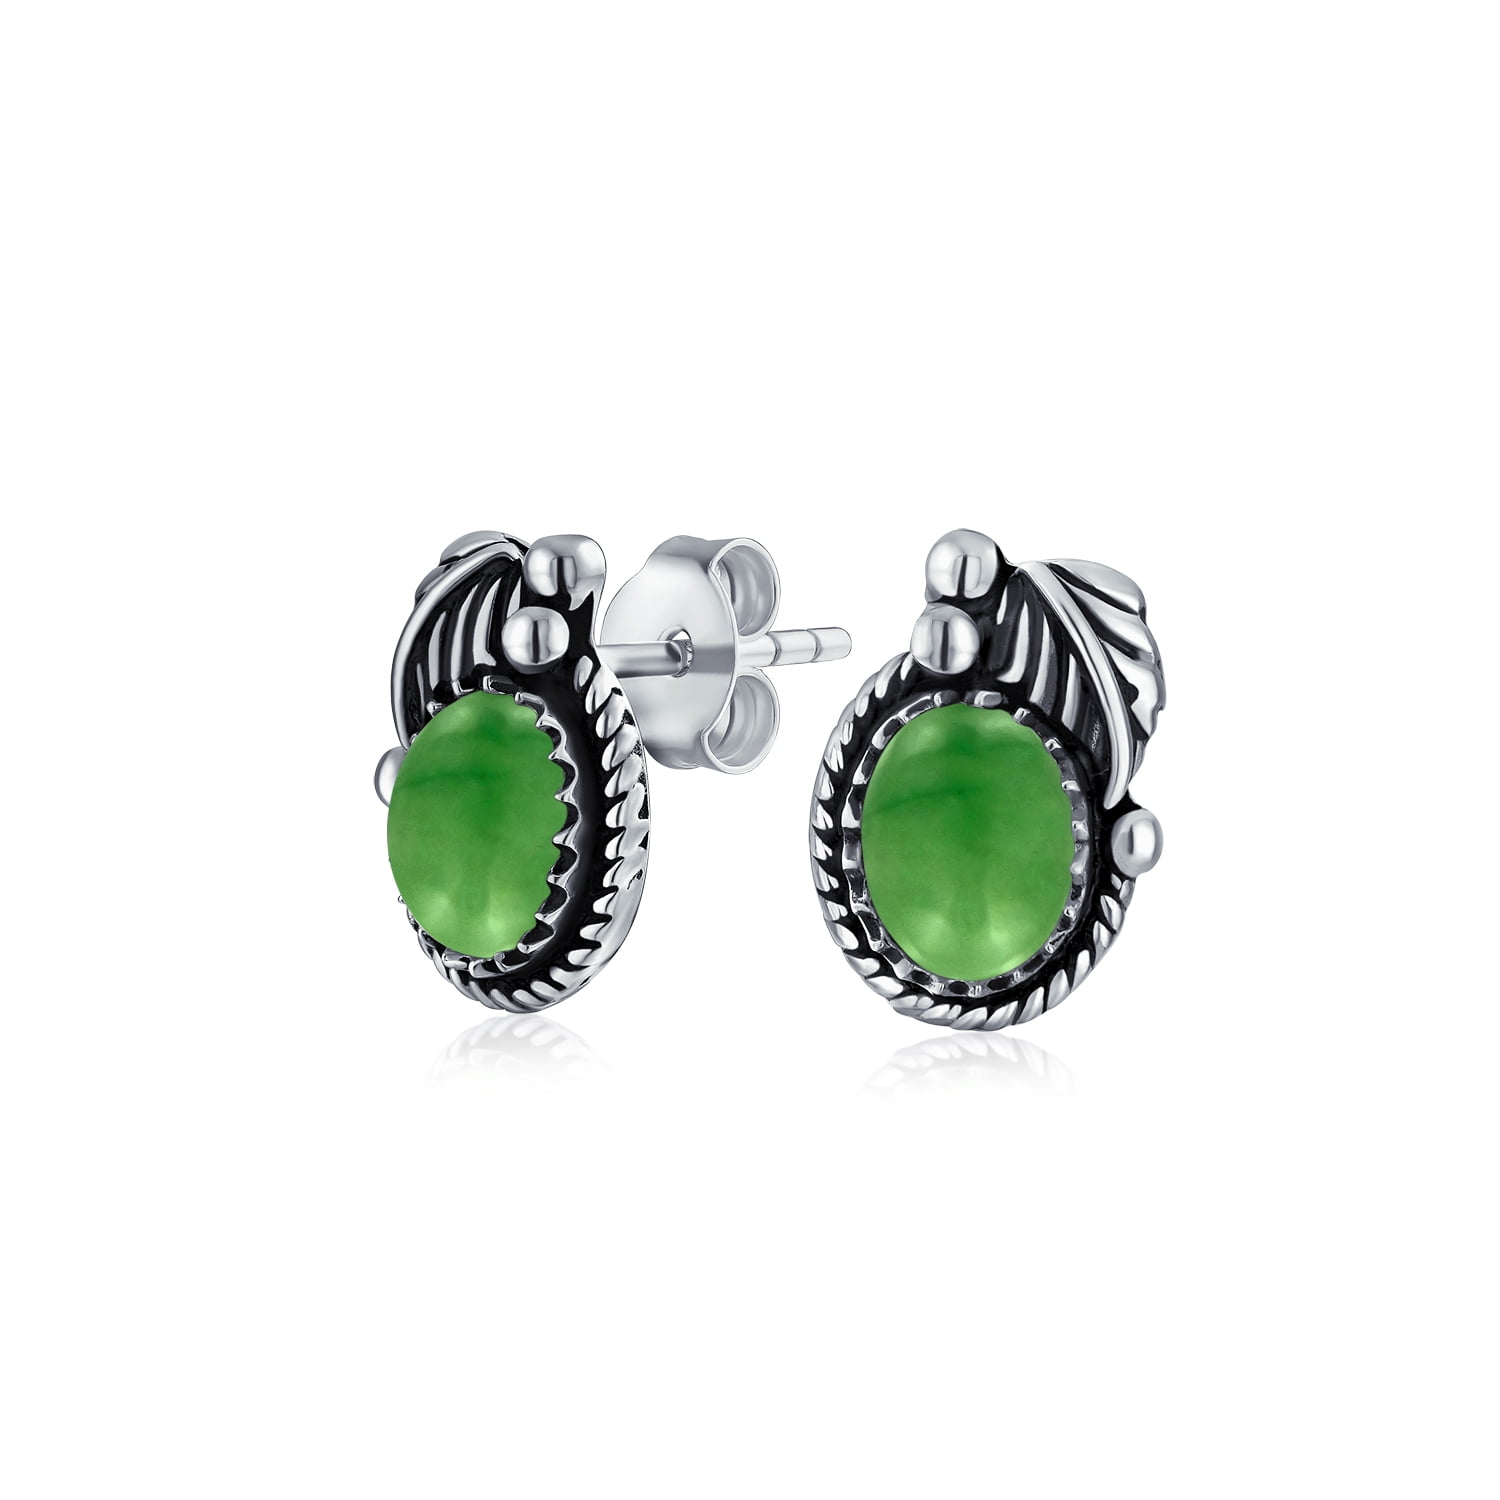 Jade & Carnelian Teardrop Chain Earrings // Dangly Earrings Genuine Gemstones Sterling Silver Handmade Hypoallergenic Stainless Steel Chain